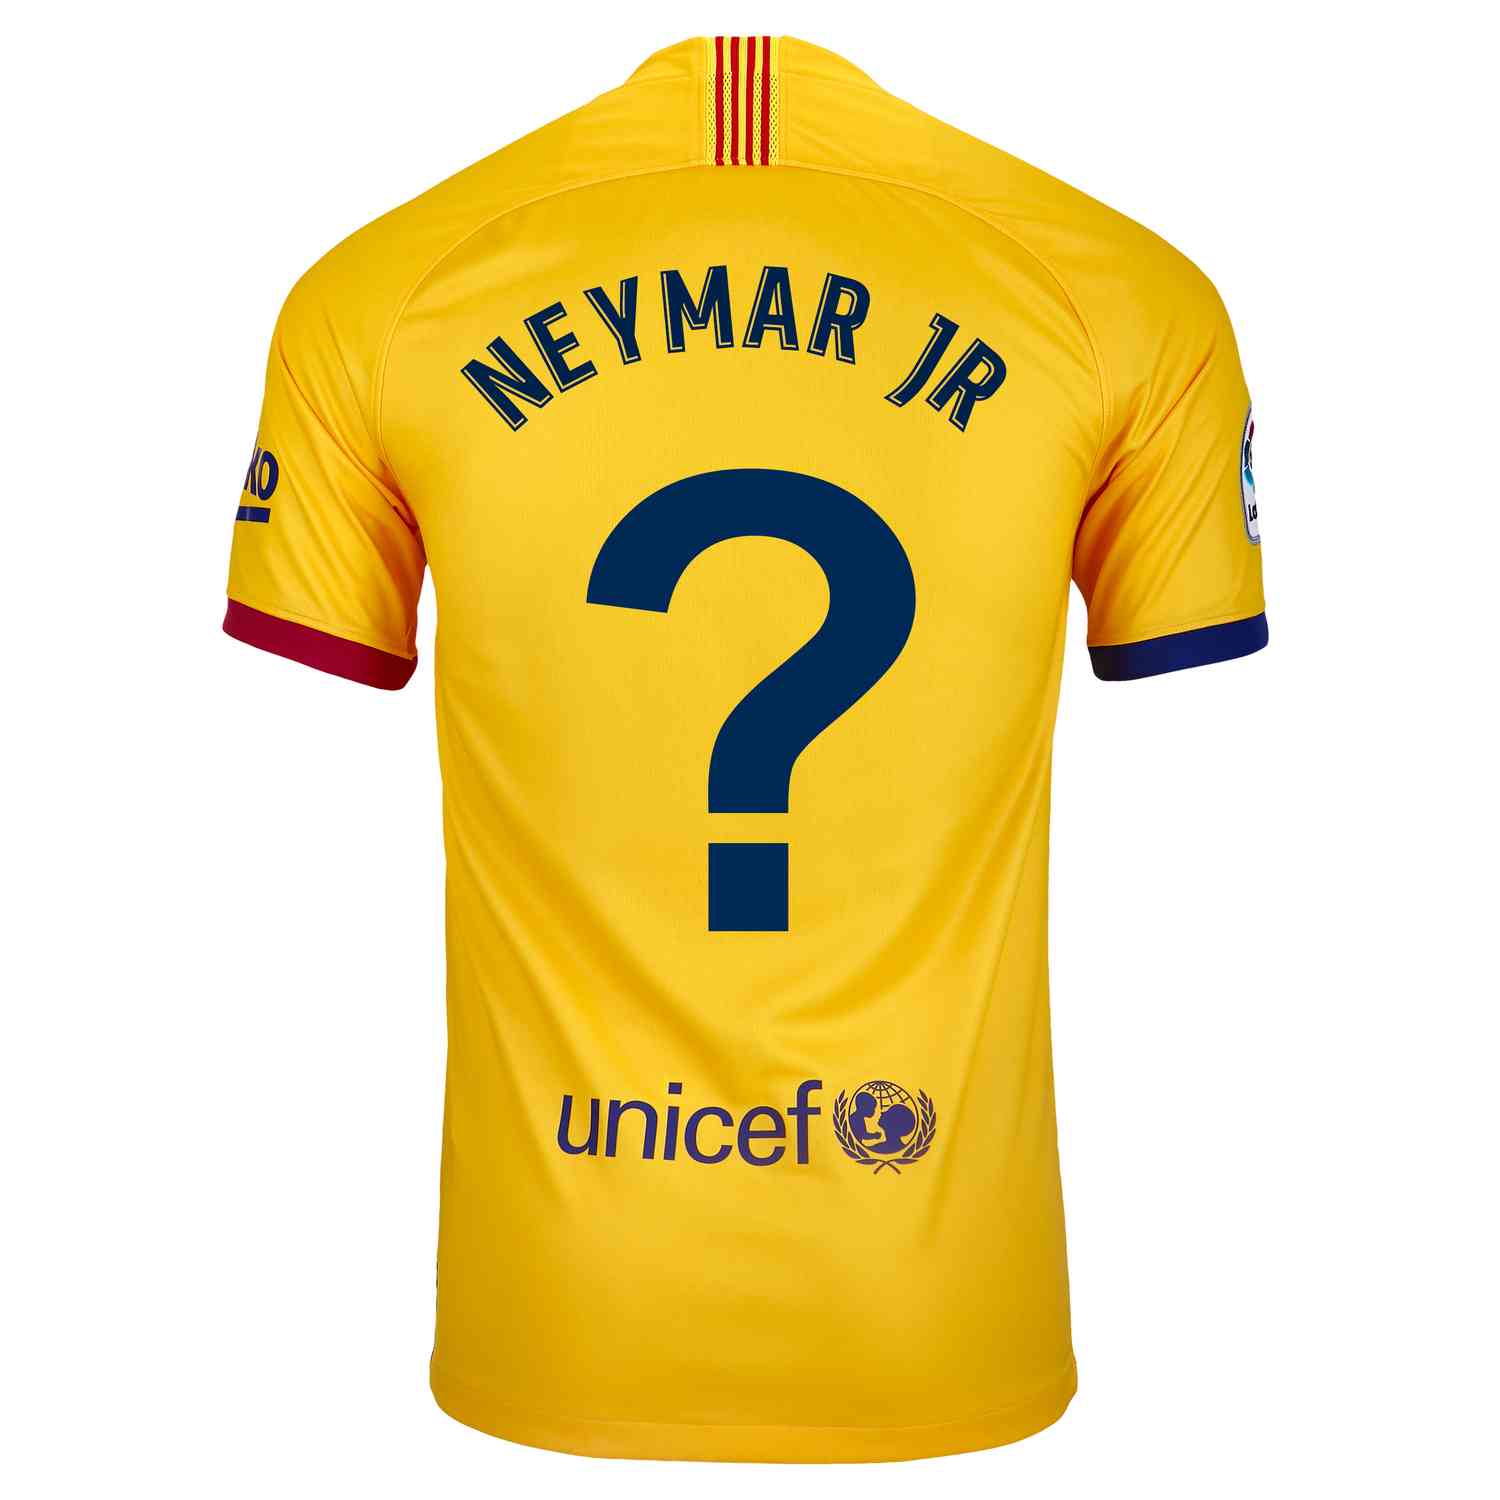 2019/20 Nike Neymar Jr Away Jersey -